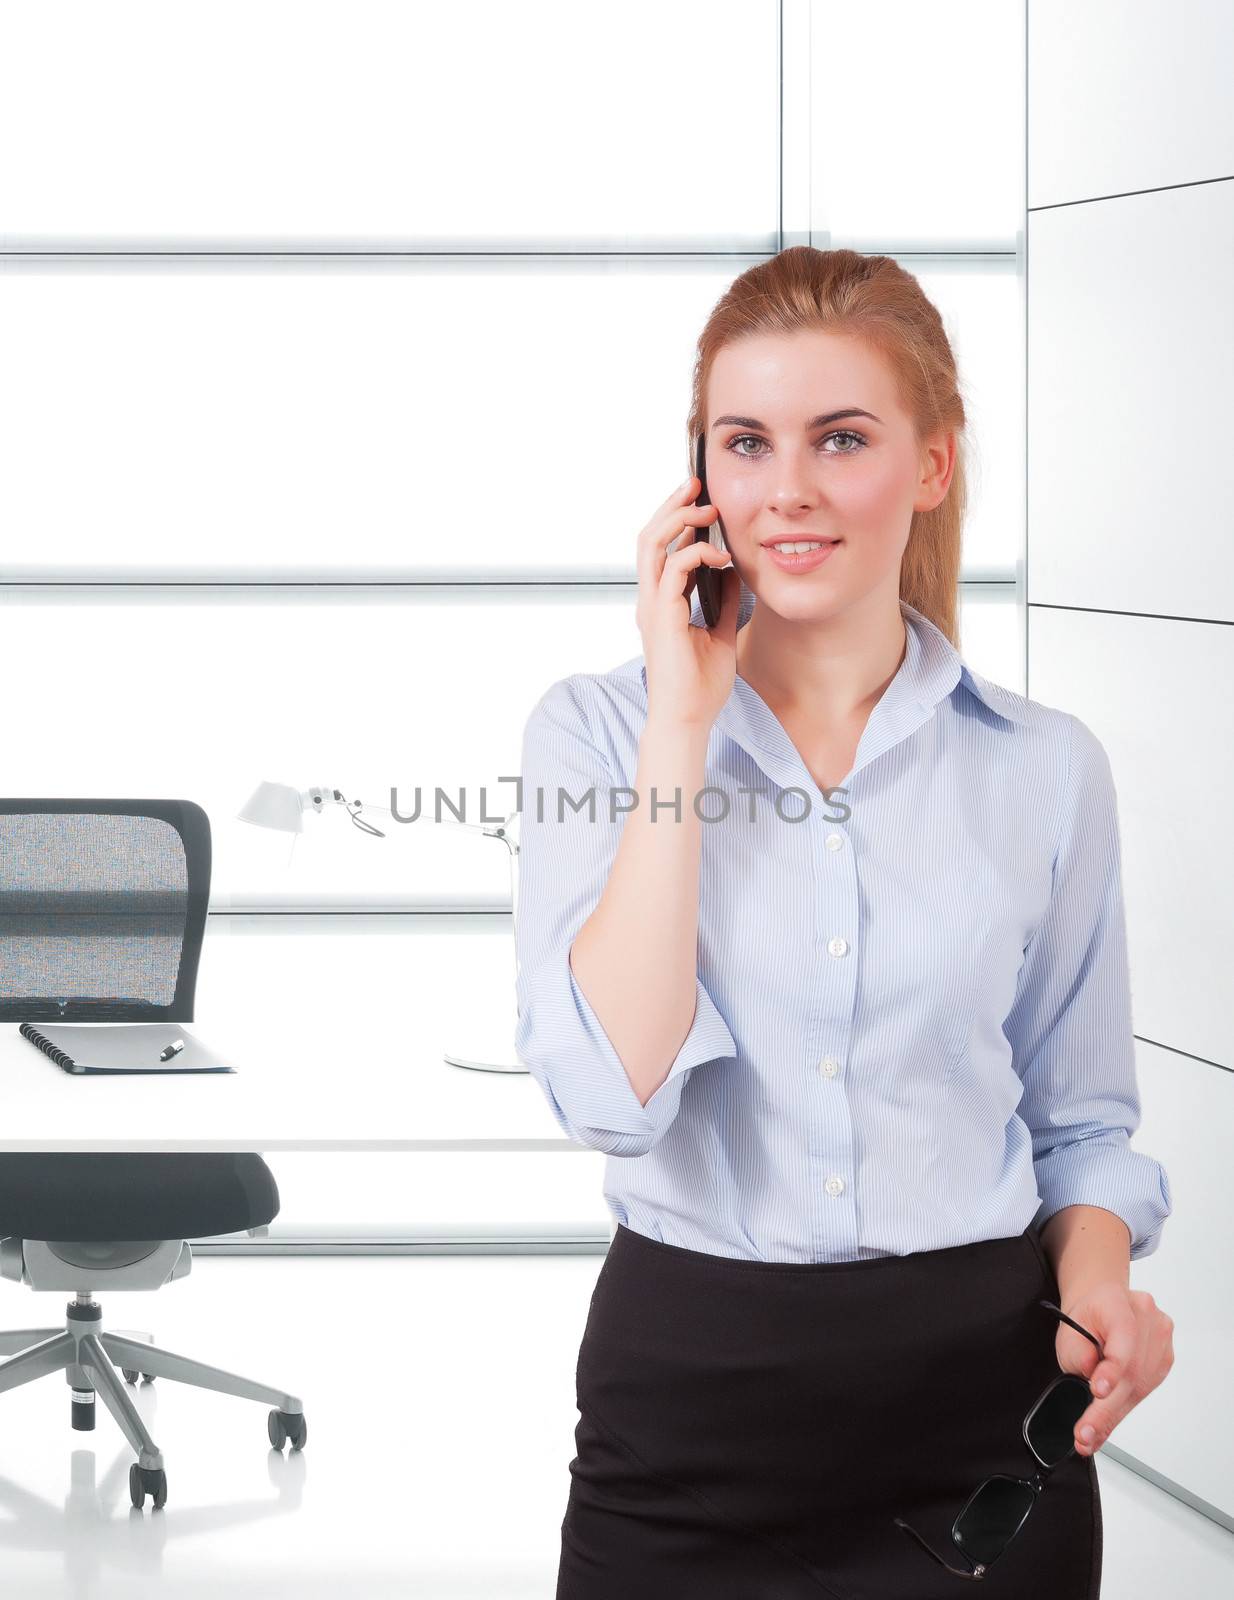 businesswoman using phone by matteobragaglio